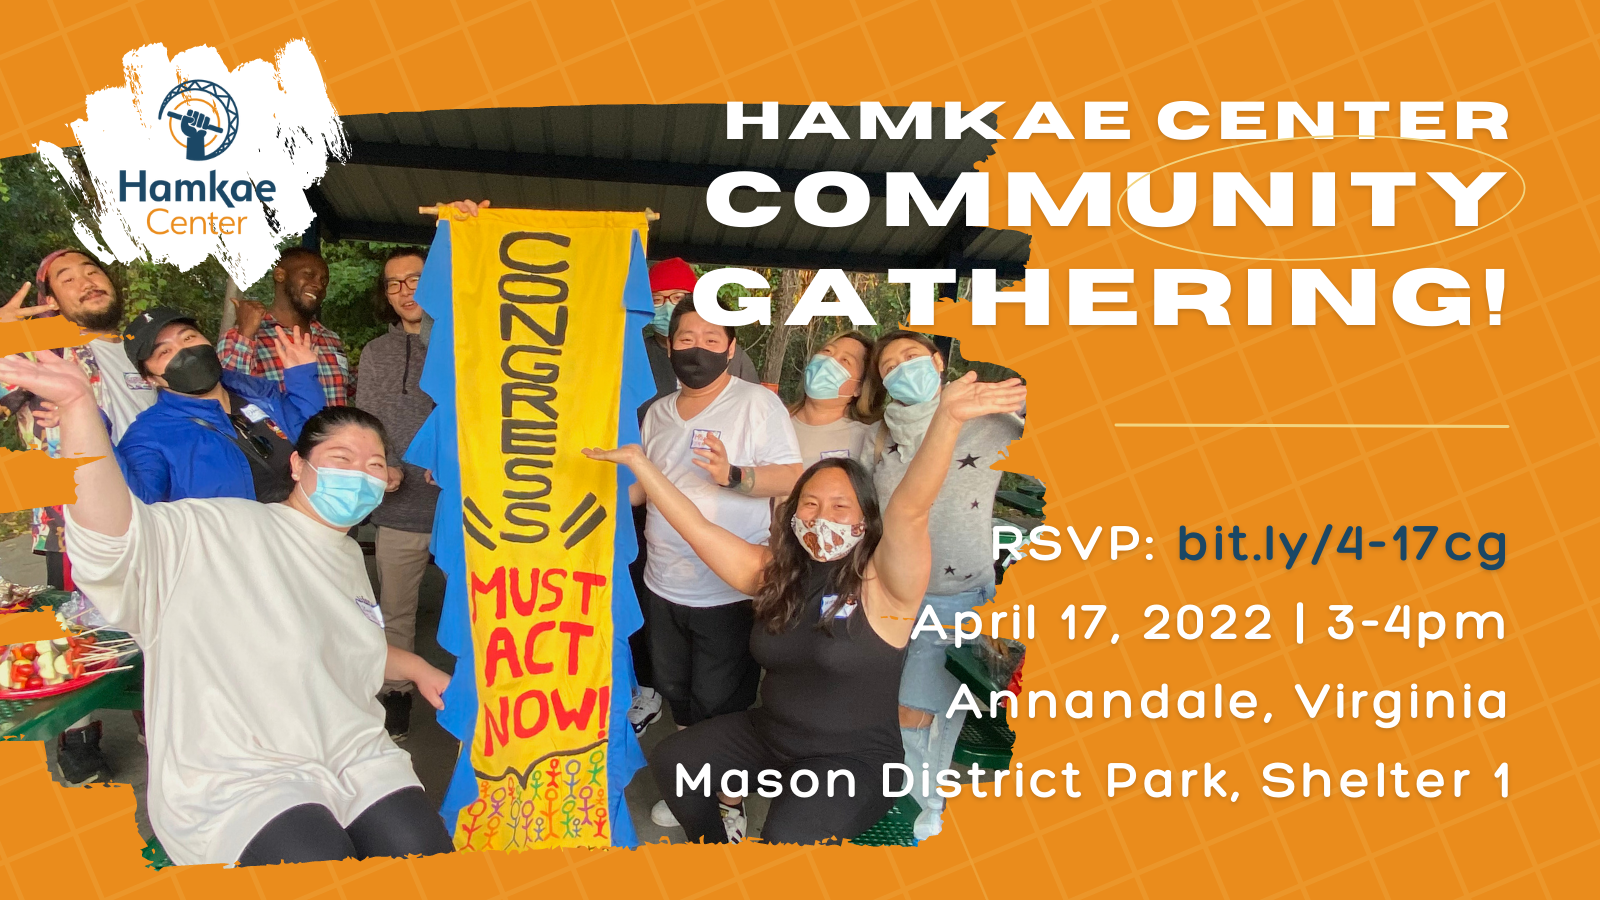 Hamkae Center Community Gathering